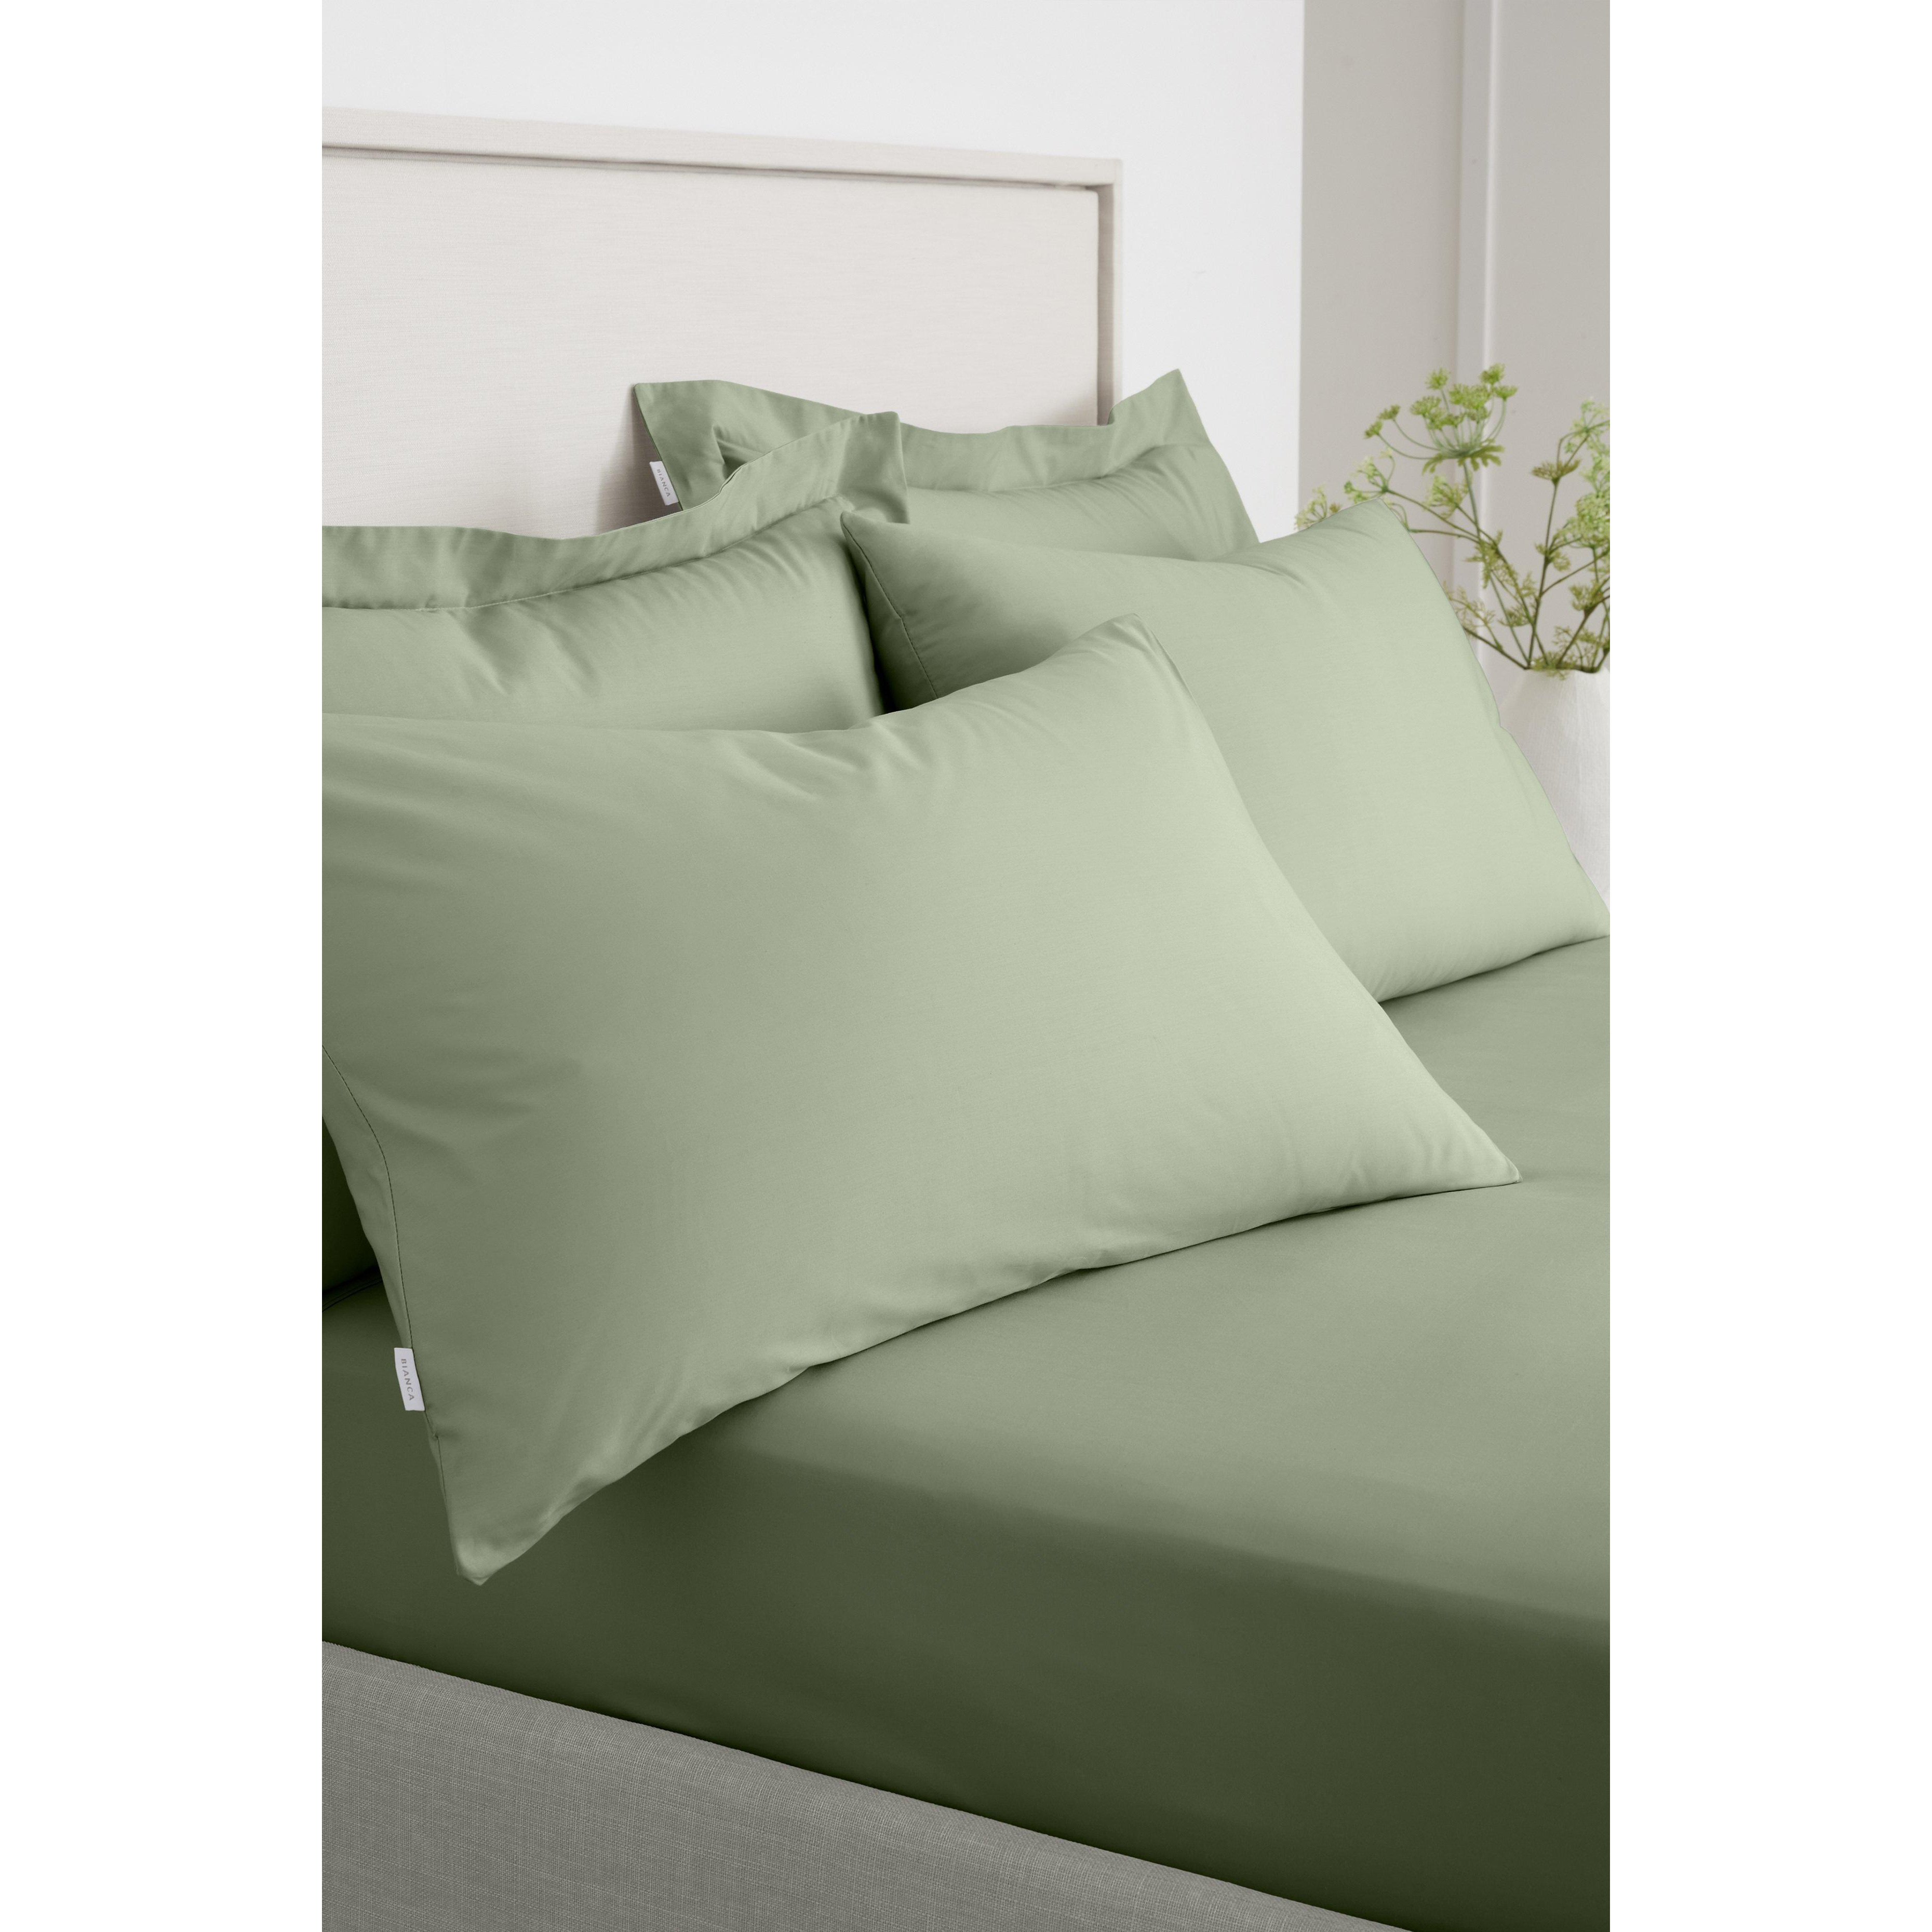 '200 Thread Count Cotton Percale' Standard Pillowcase Pair - image 1